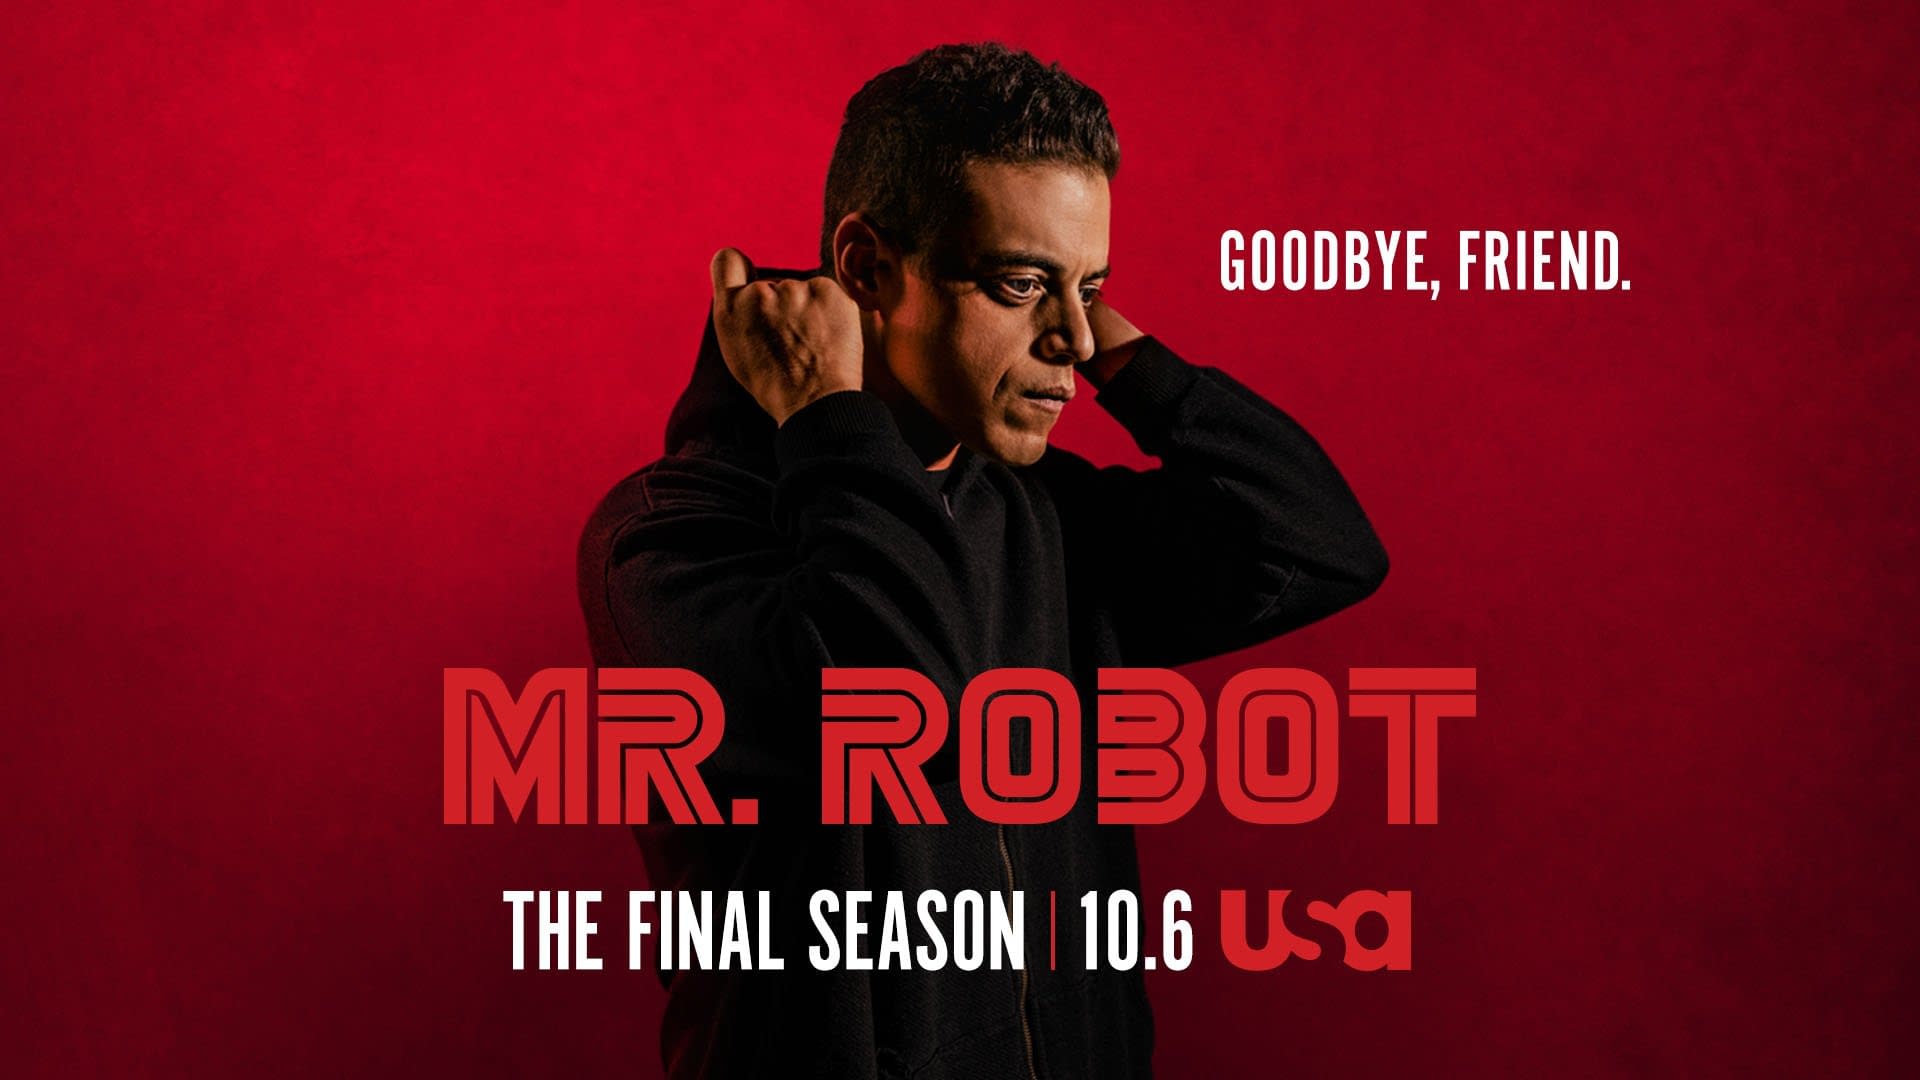 Mr. Robot Cast Recaps 3 Seasons in 3 Minutes